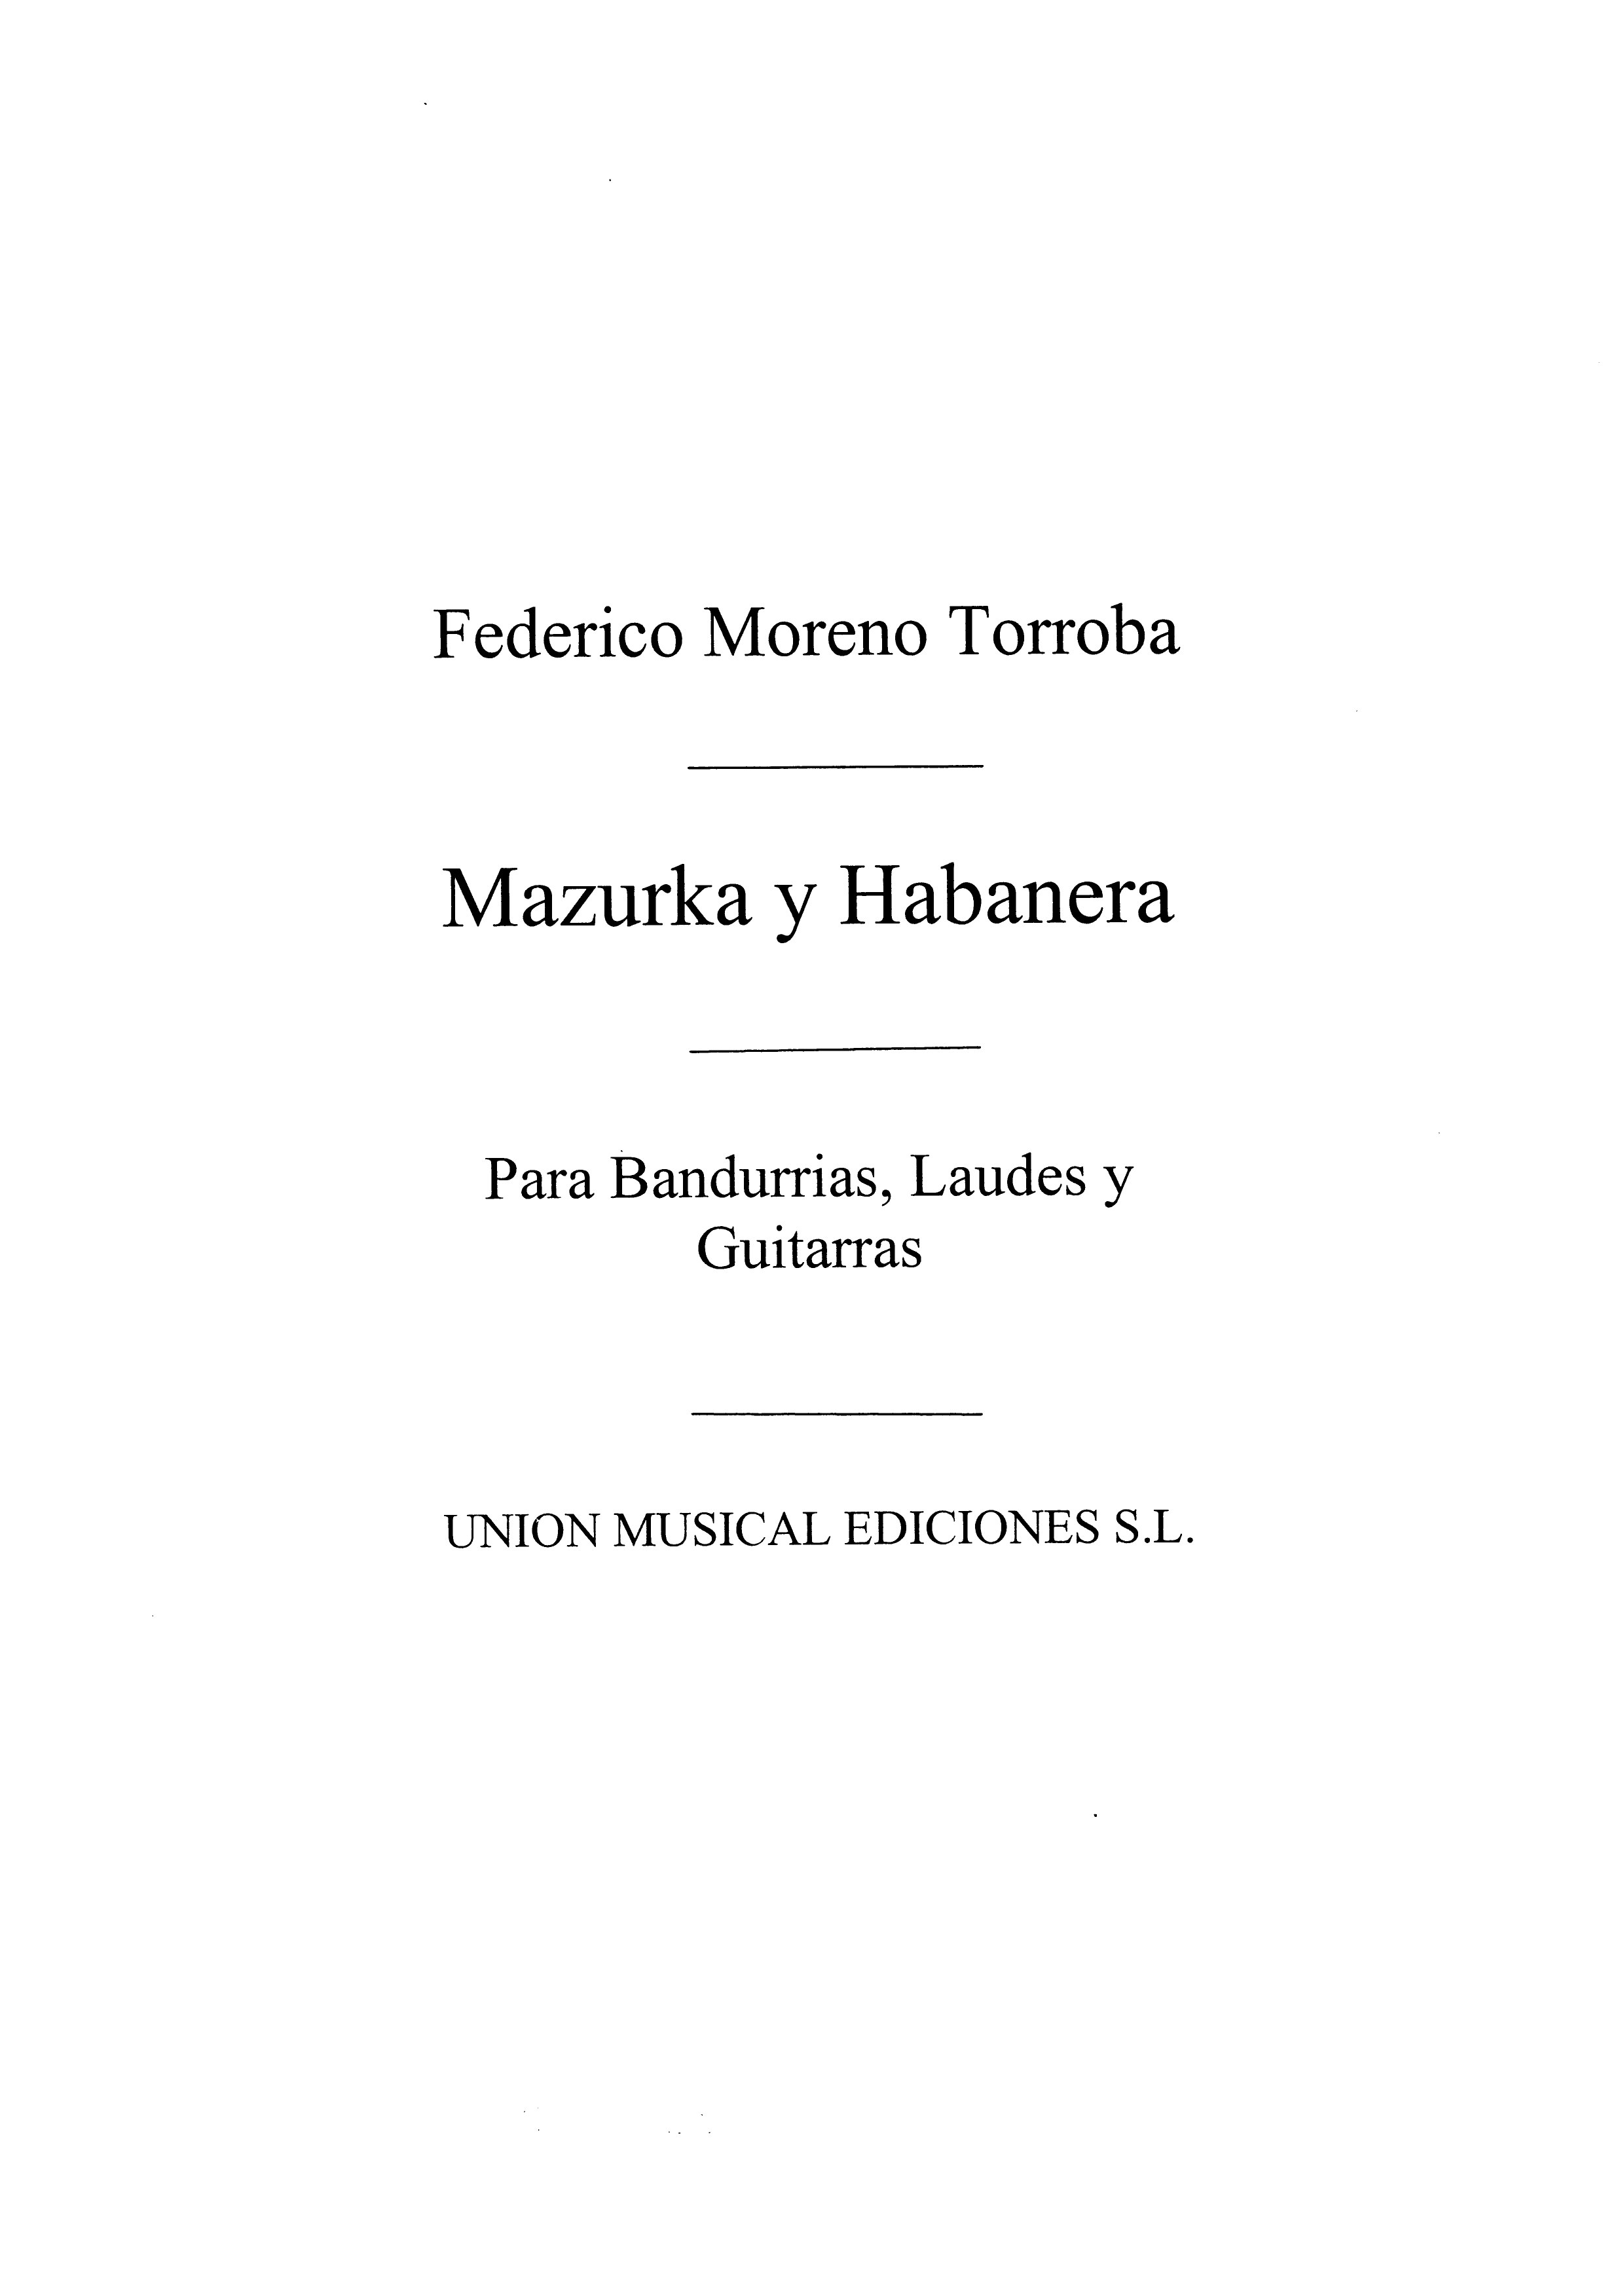 Federico Moreno Torroba: Mazurka Y Habanera De Luisa Fernanda: Opera: